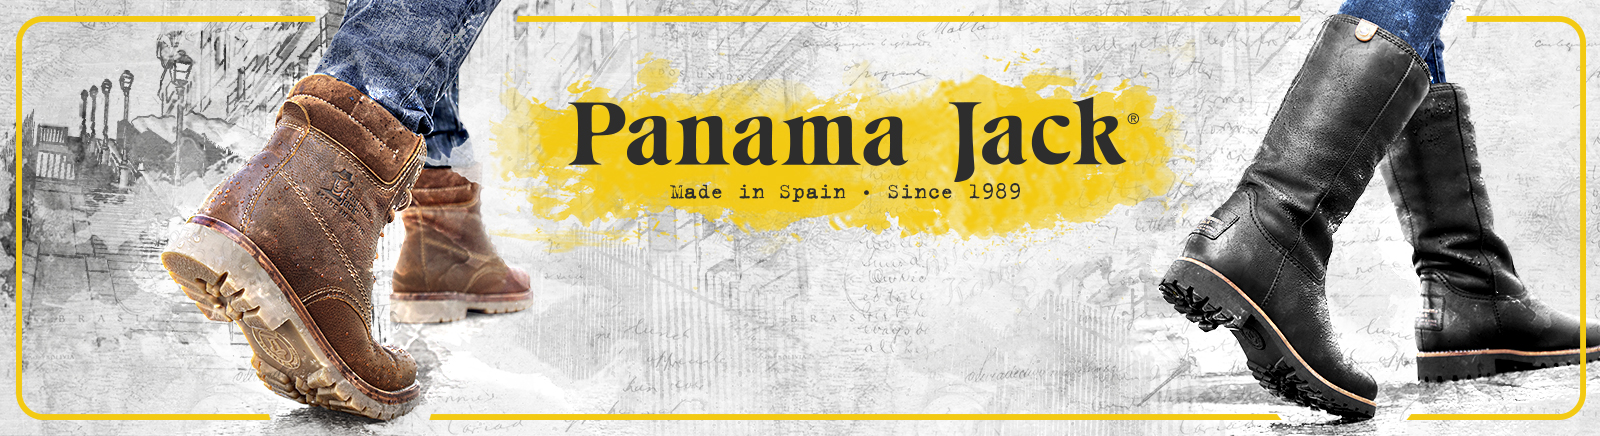 Panama Jack Schuhe &#9658; online kaufen bei Prange